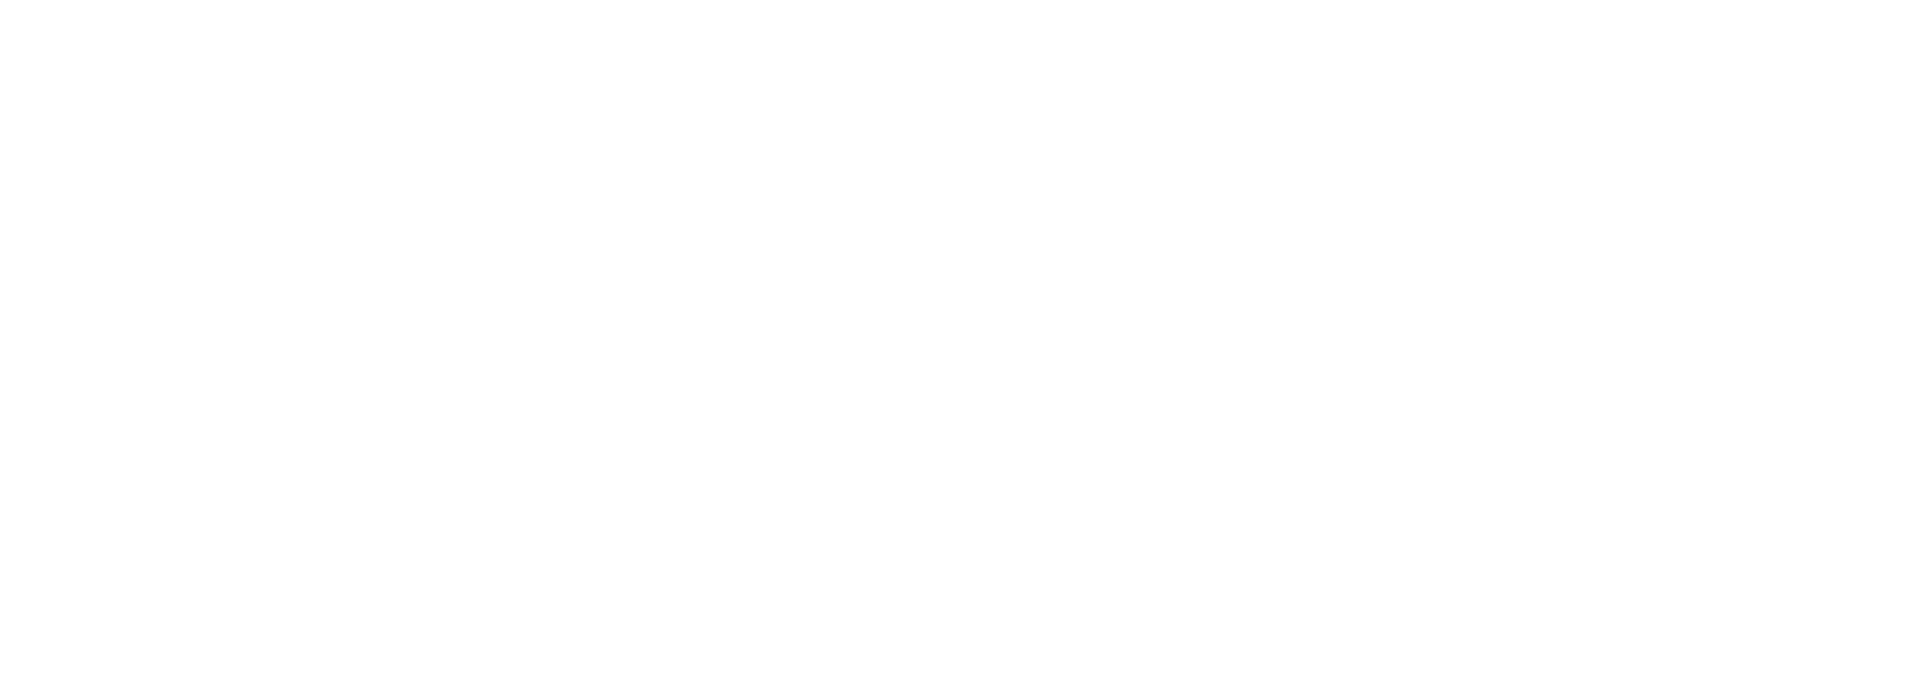 Call Centre Telephone Response Graphic Element